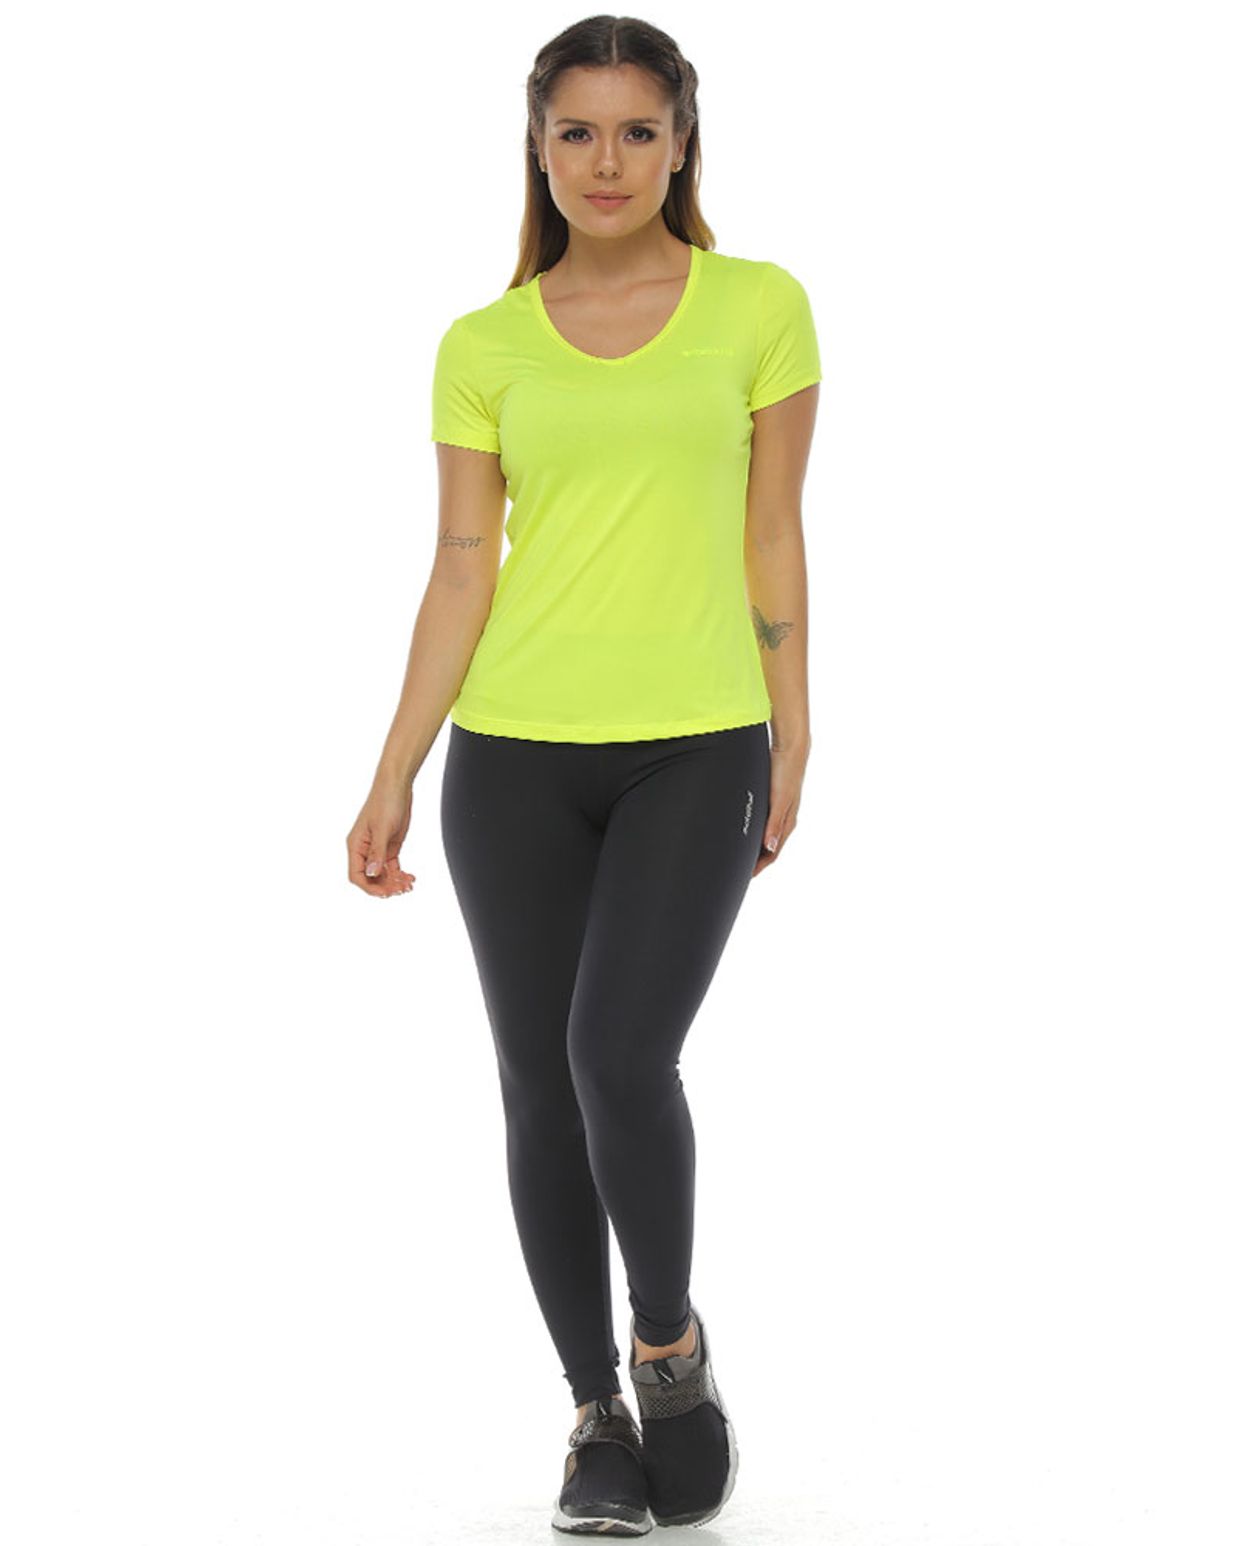 Camiseta deportiva mujer, color amarillo lima - racketball movil